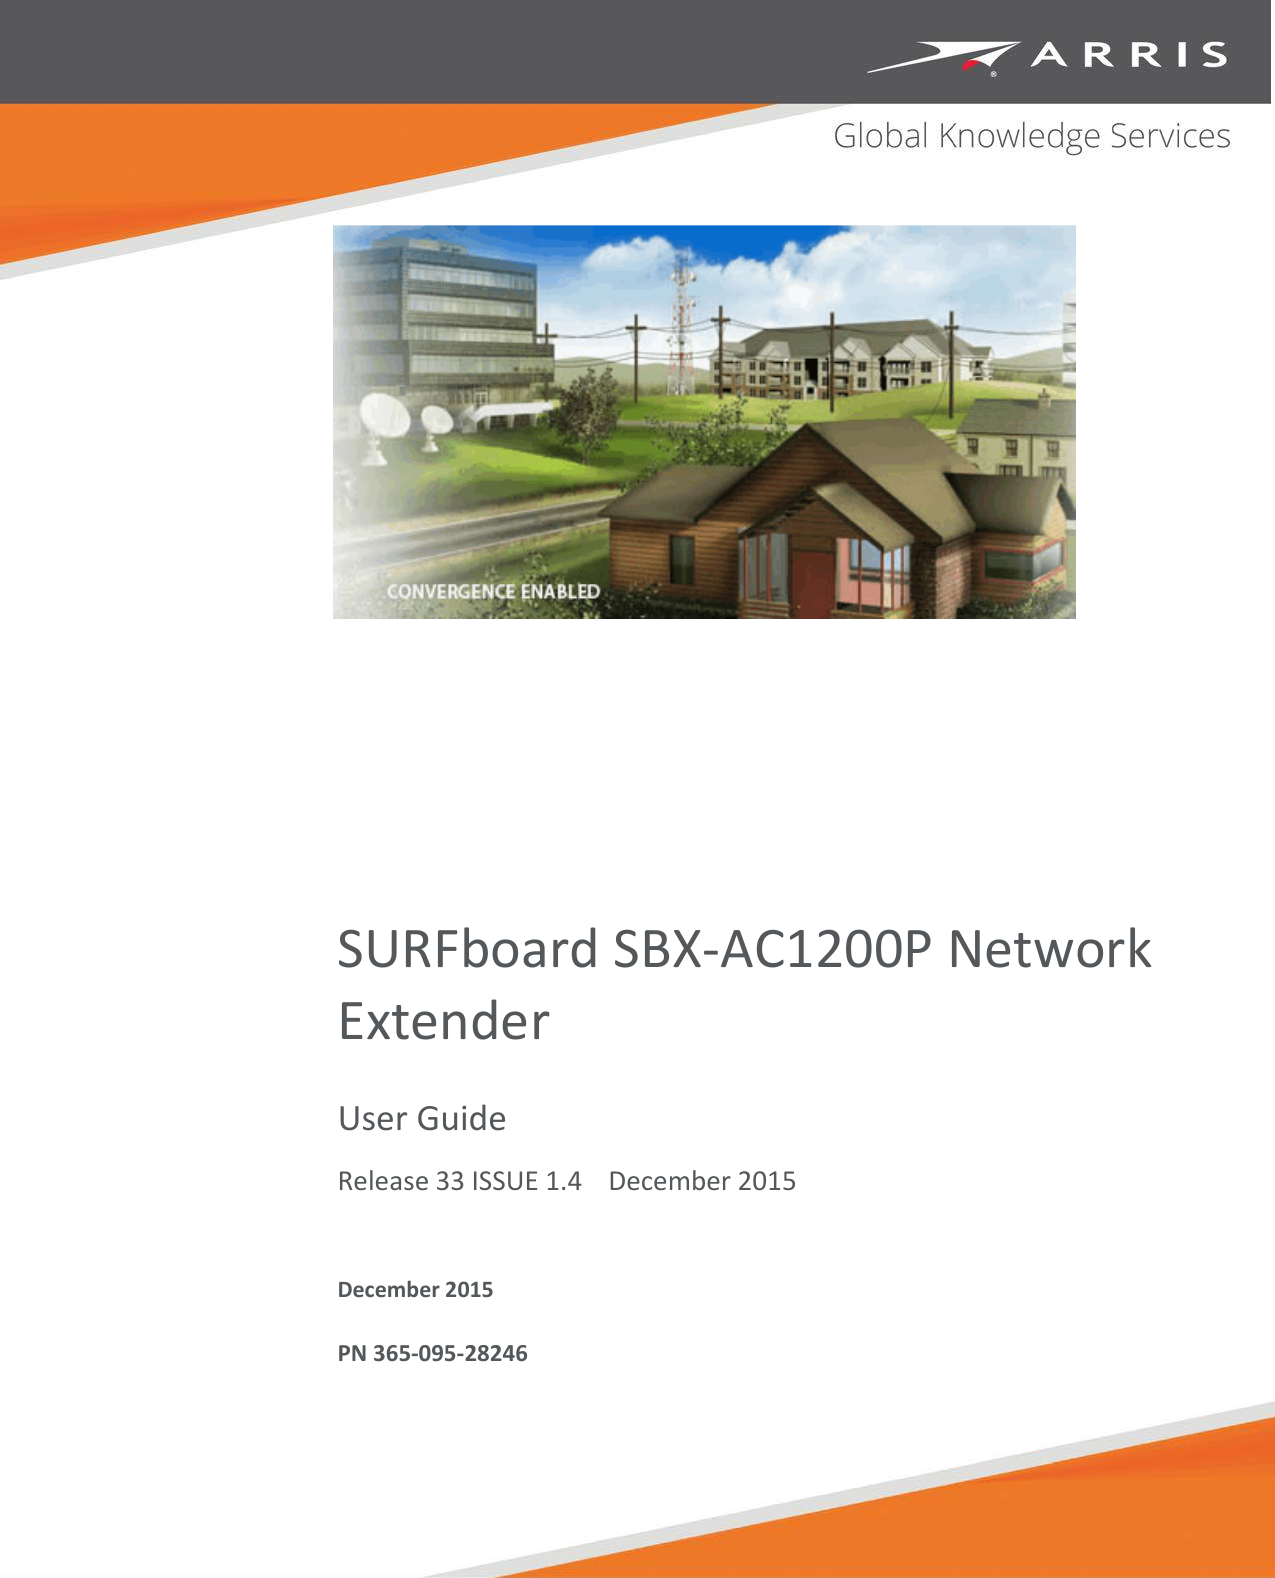   SURFboard SBX-AC1200P Network Extender User Guide PN 365-095-28246 Release 33 ISSUE 1.4    December 2015  December 2015  